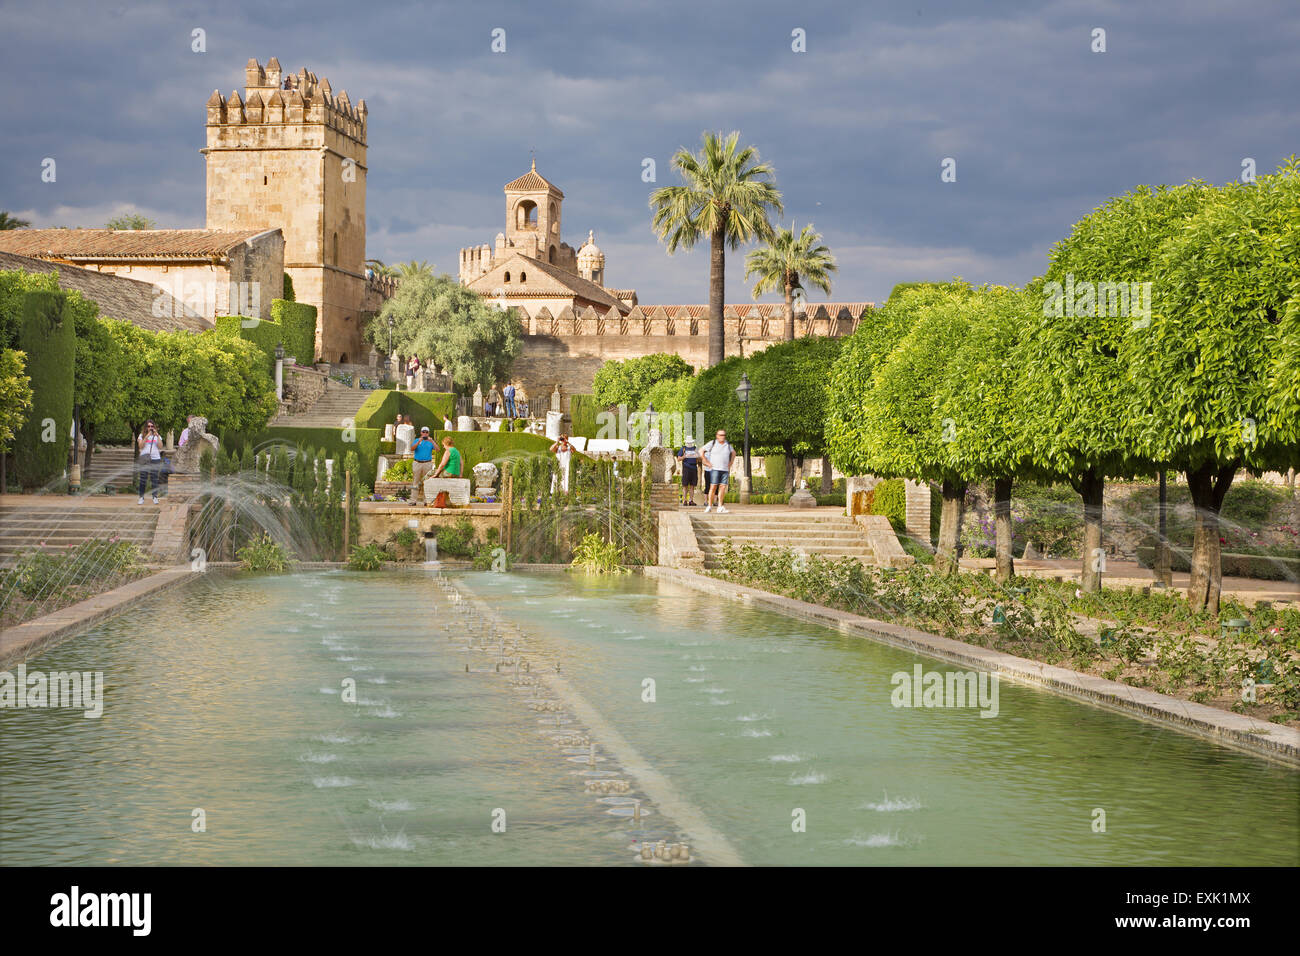 CORDOBA, SPAIN - MAY 25, 2015: The gardens of Alcazar de los Reyes Cristianos castle in evening light. Stock Photo